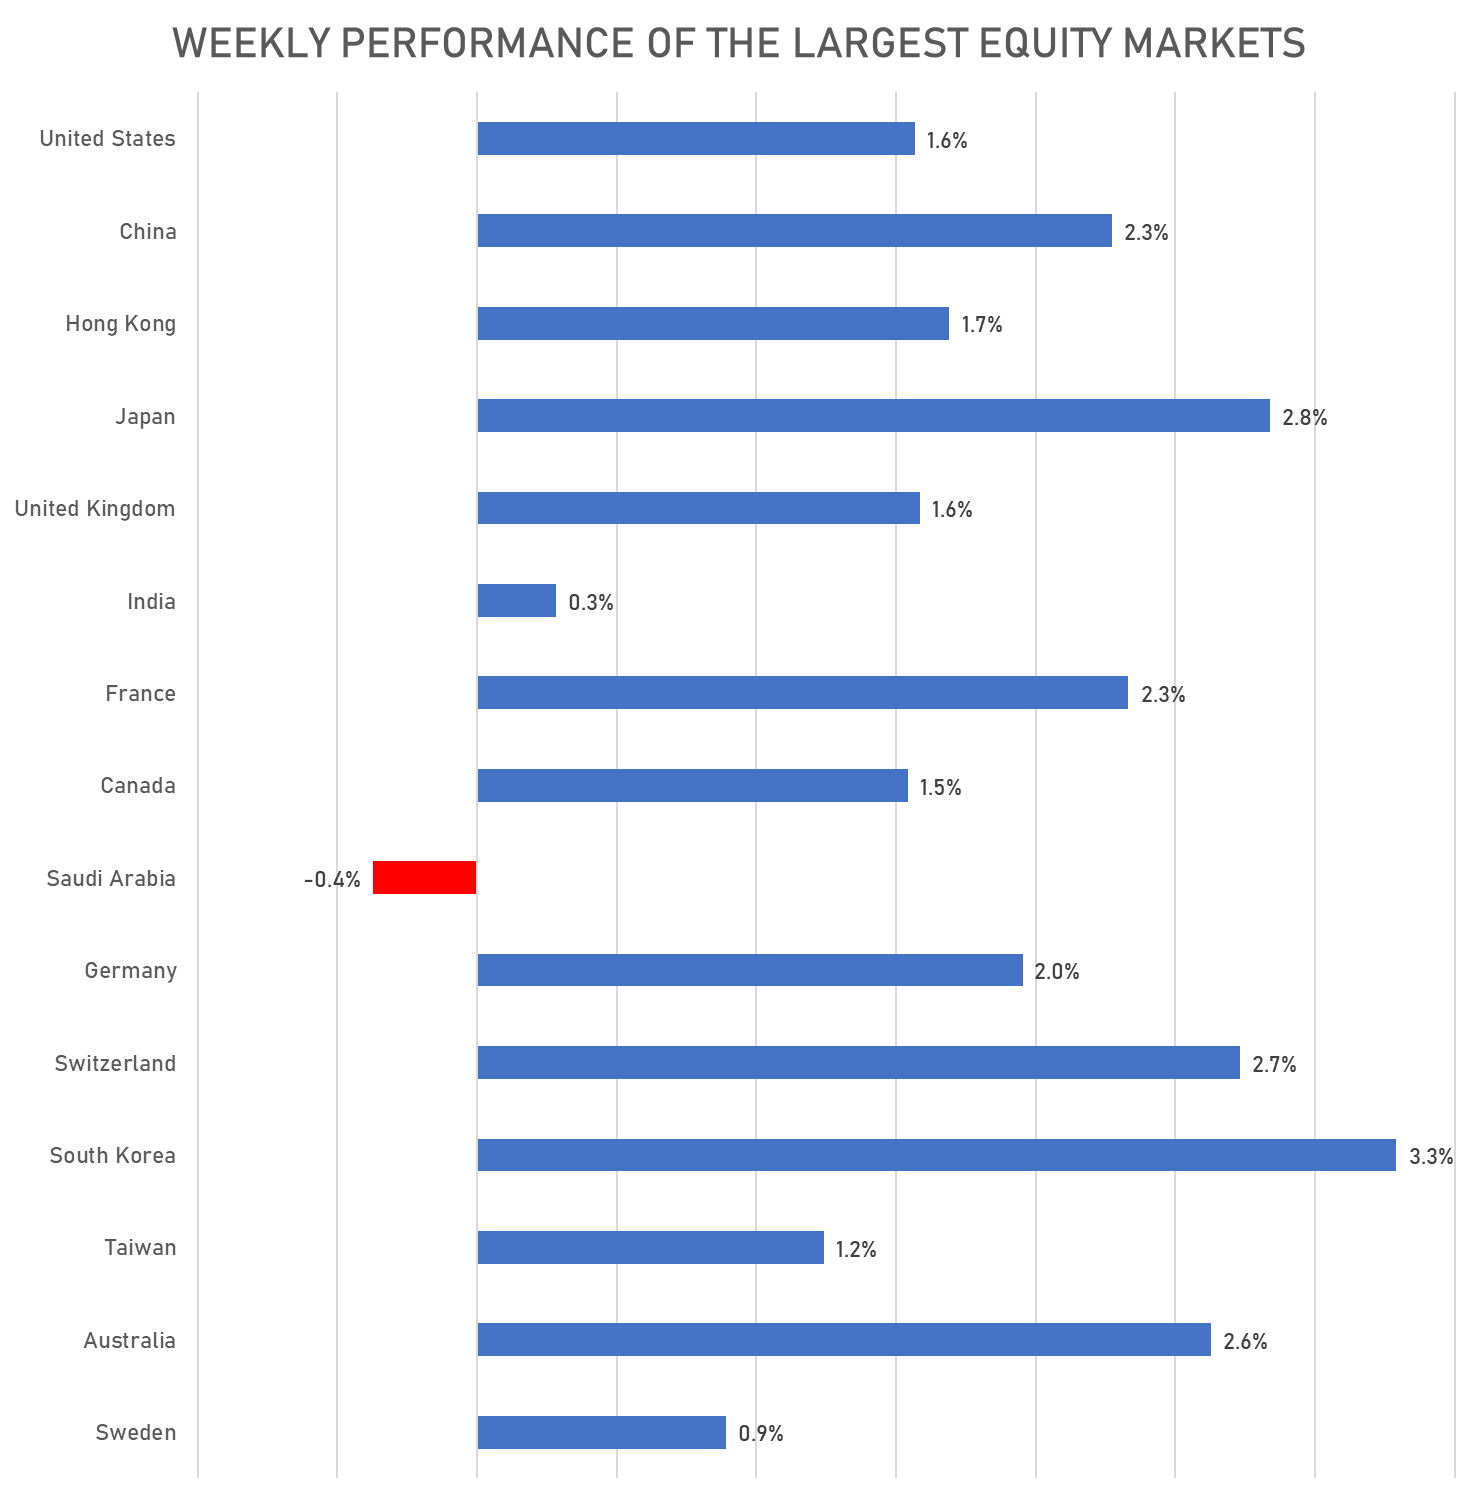 Largest Equity Markets Performance | Sources: phipost.com, FactSet data